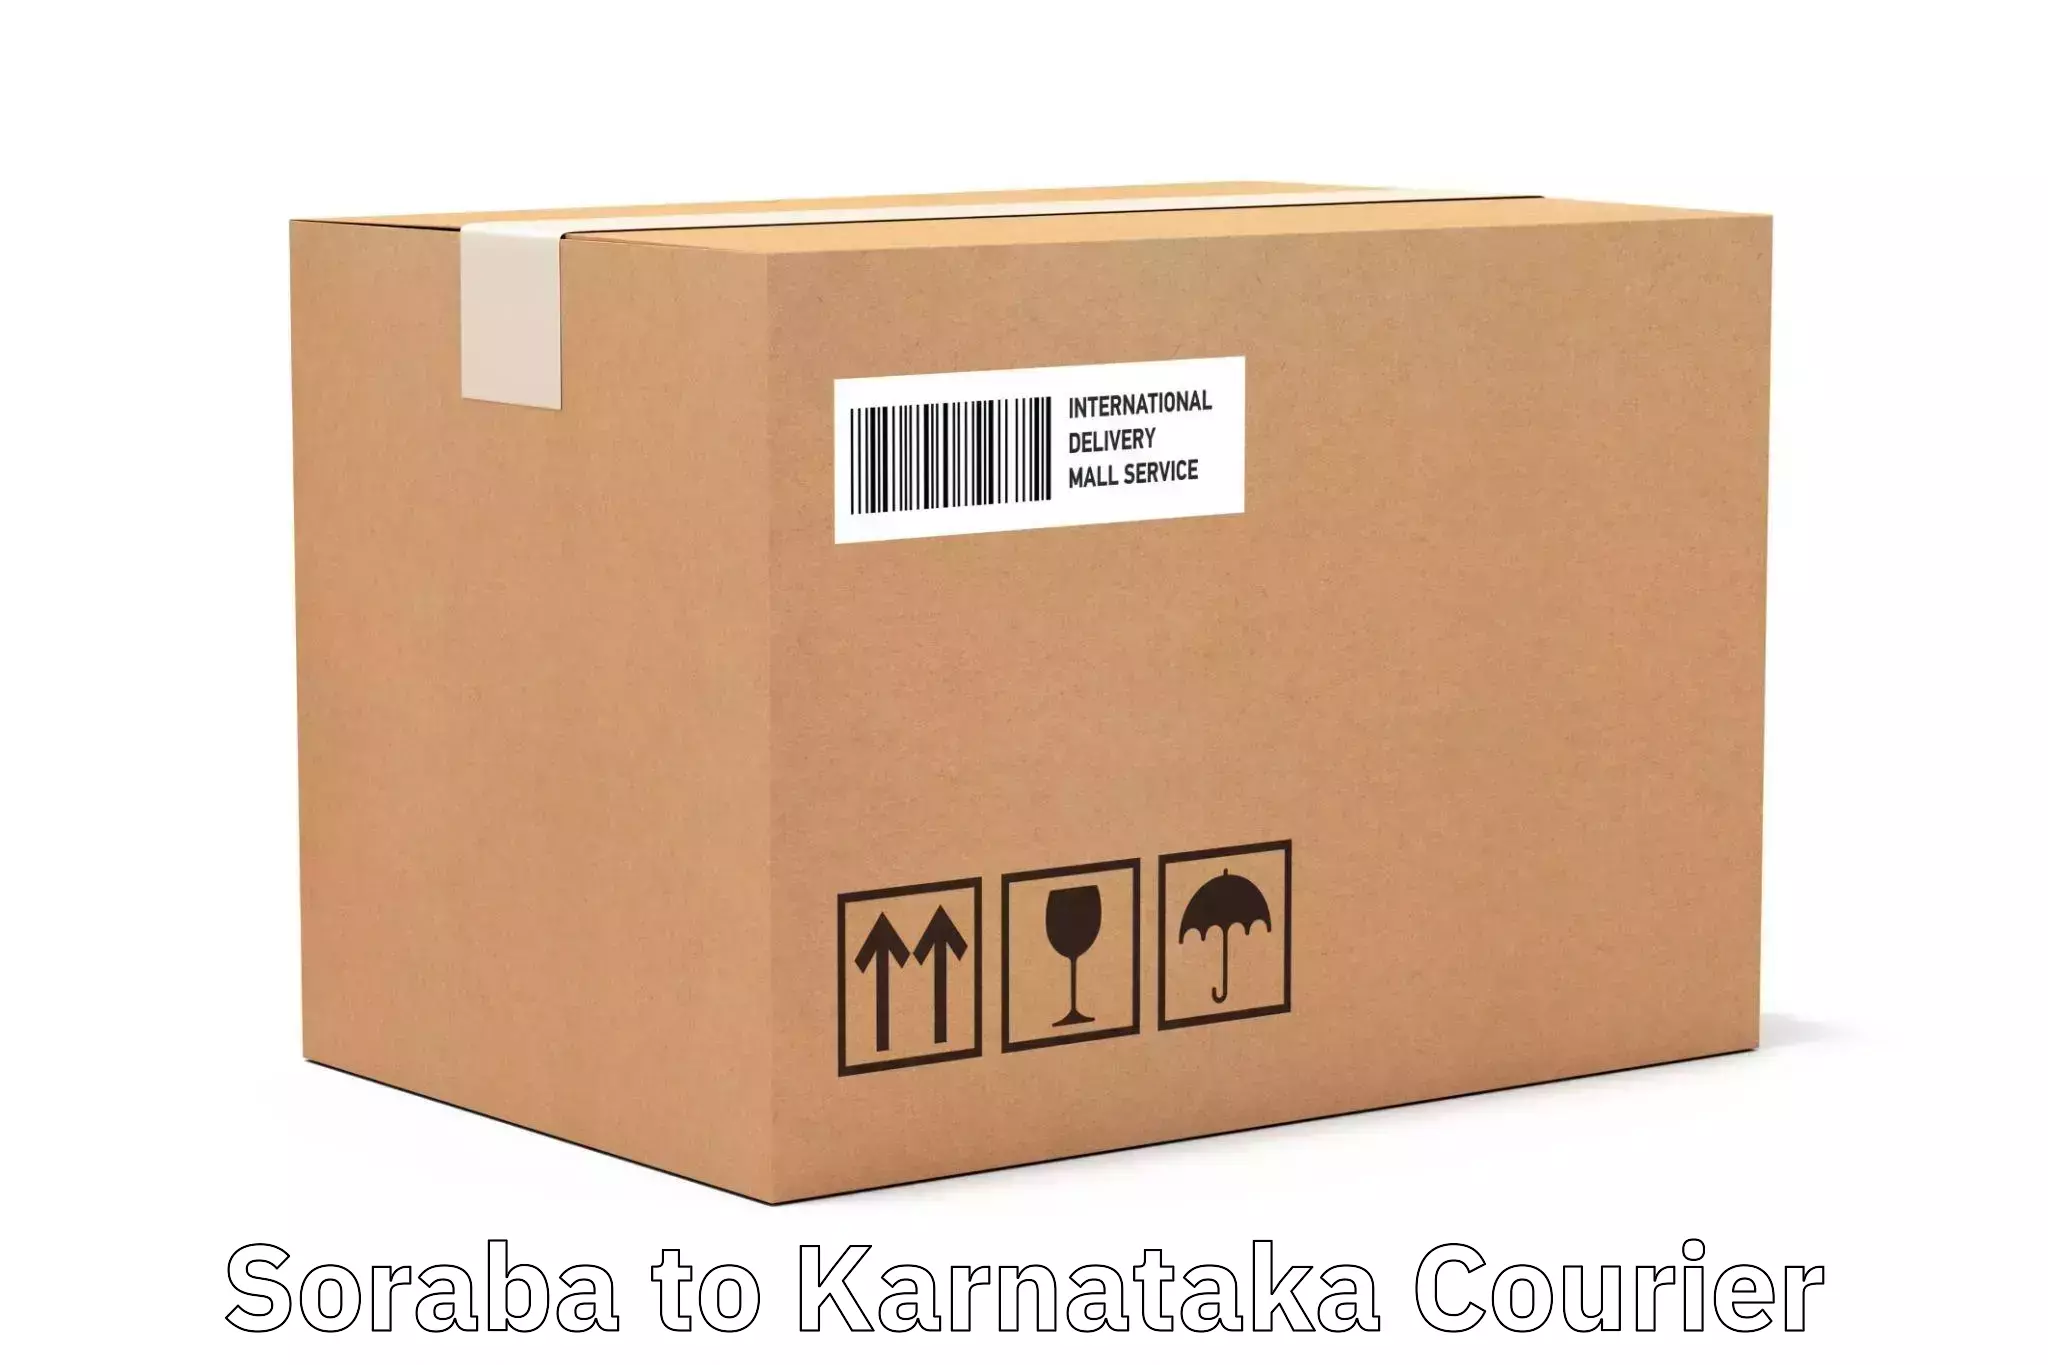 Advanced parcel tracking Soraba to Dharwad